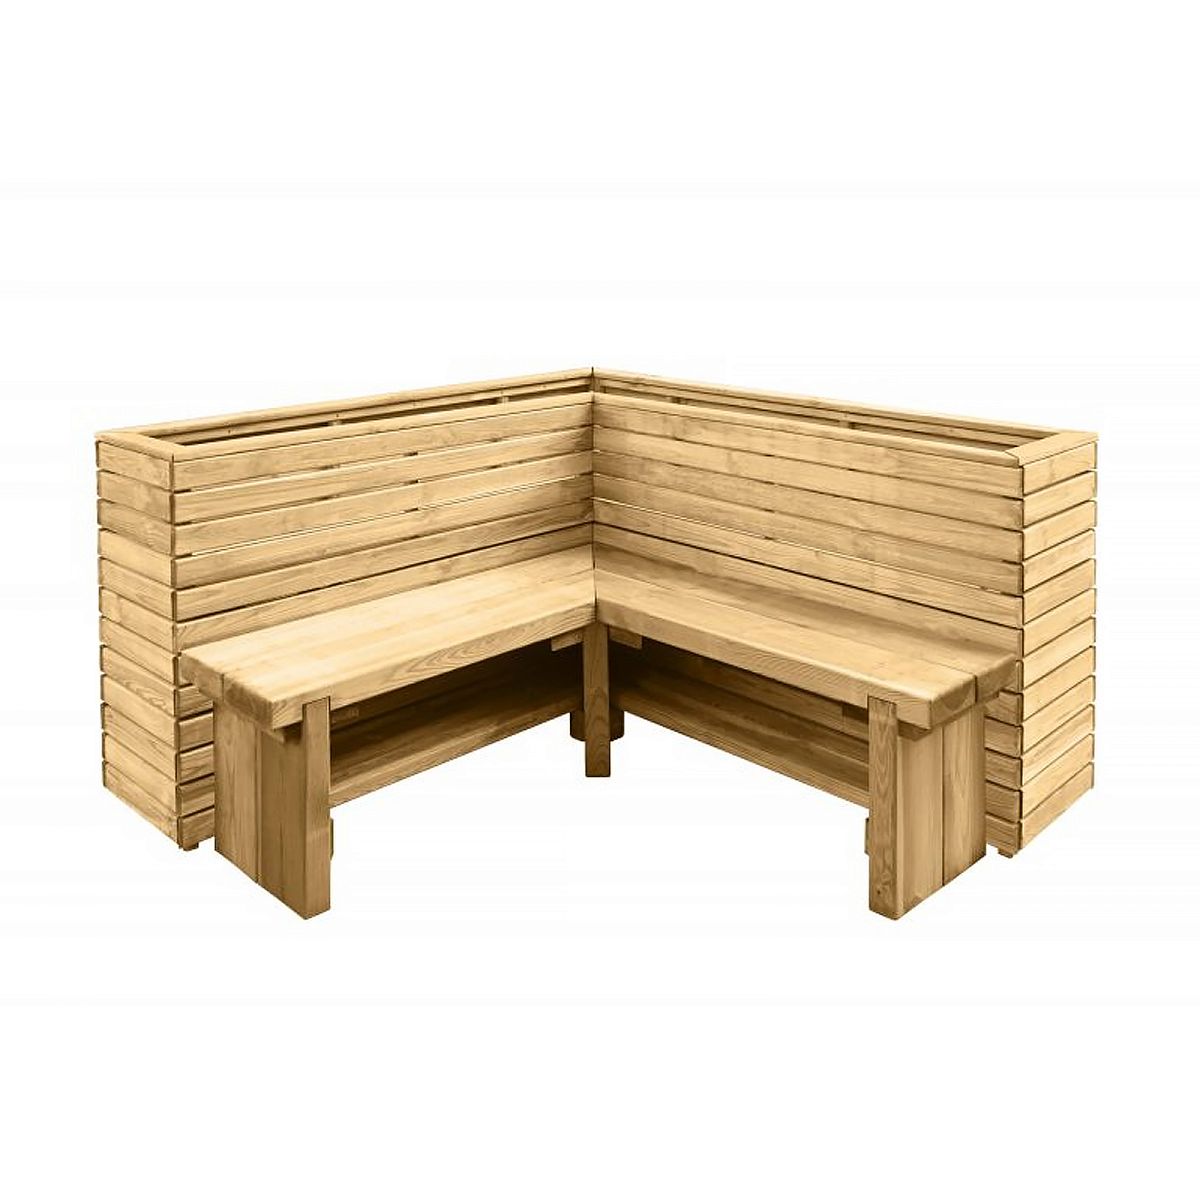 Outdoor Wooden Double Corner Sleeper Bench by Forest Garden